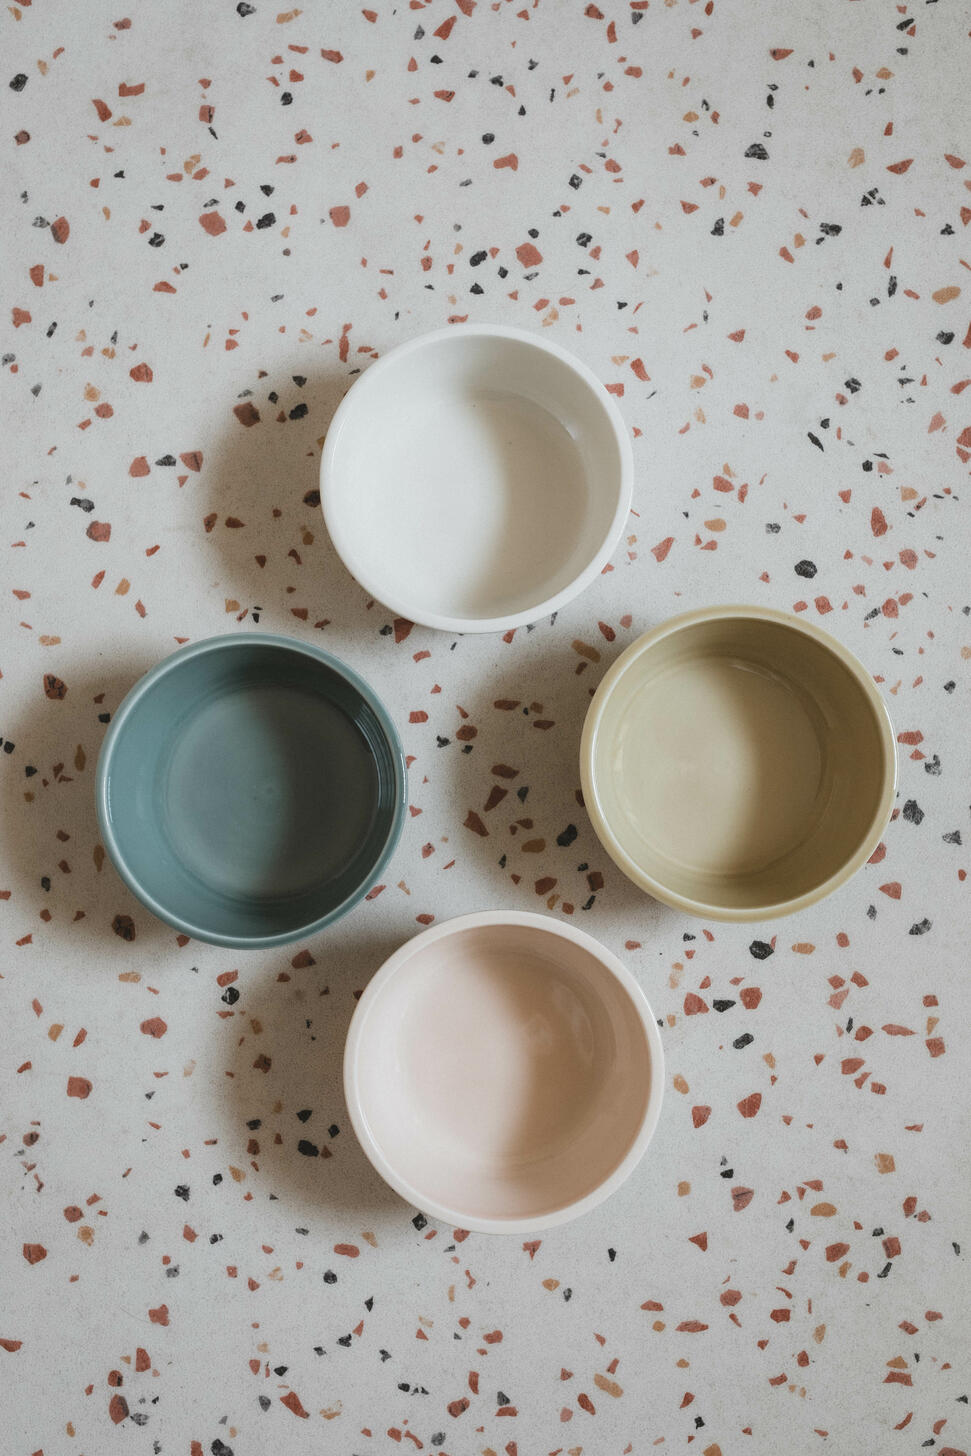 serving bowl cantine craie ceramic manufacturer